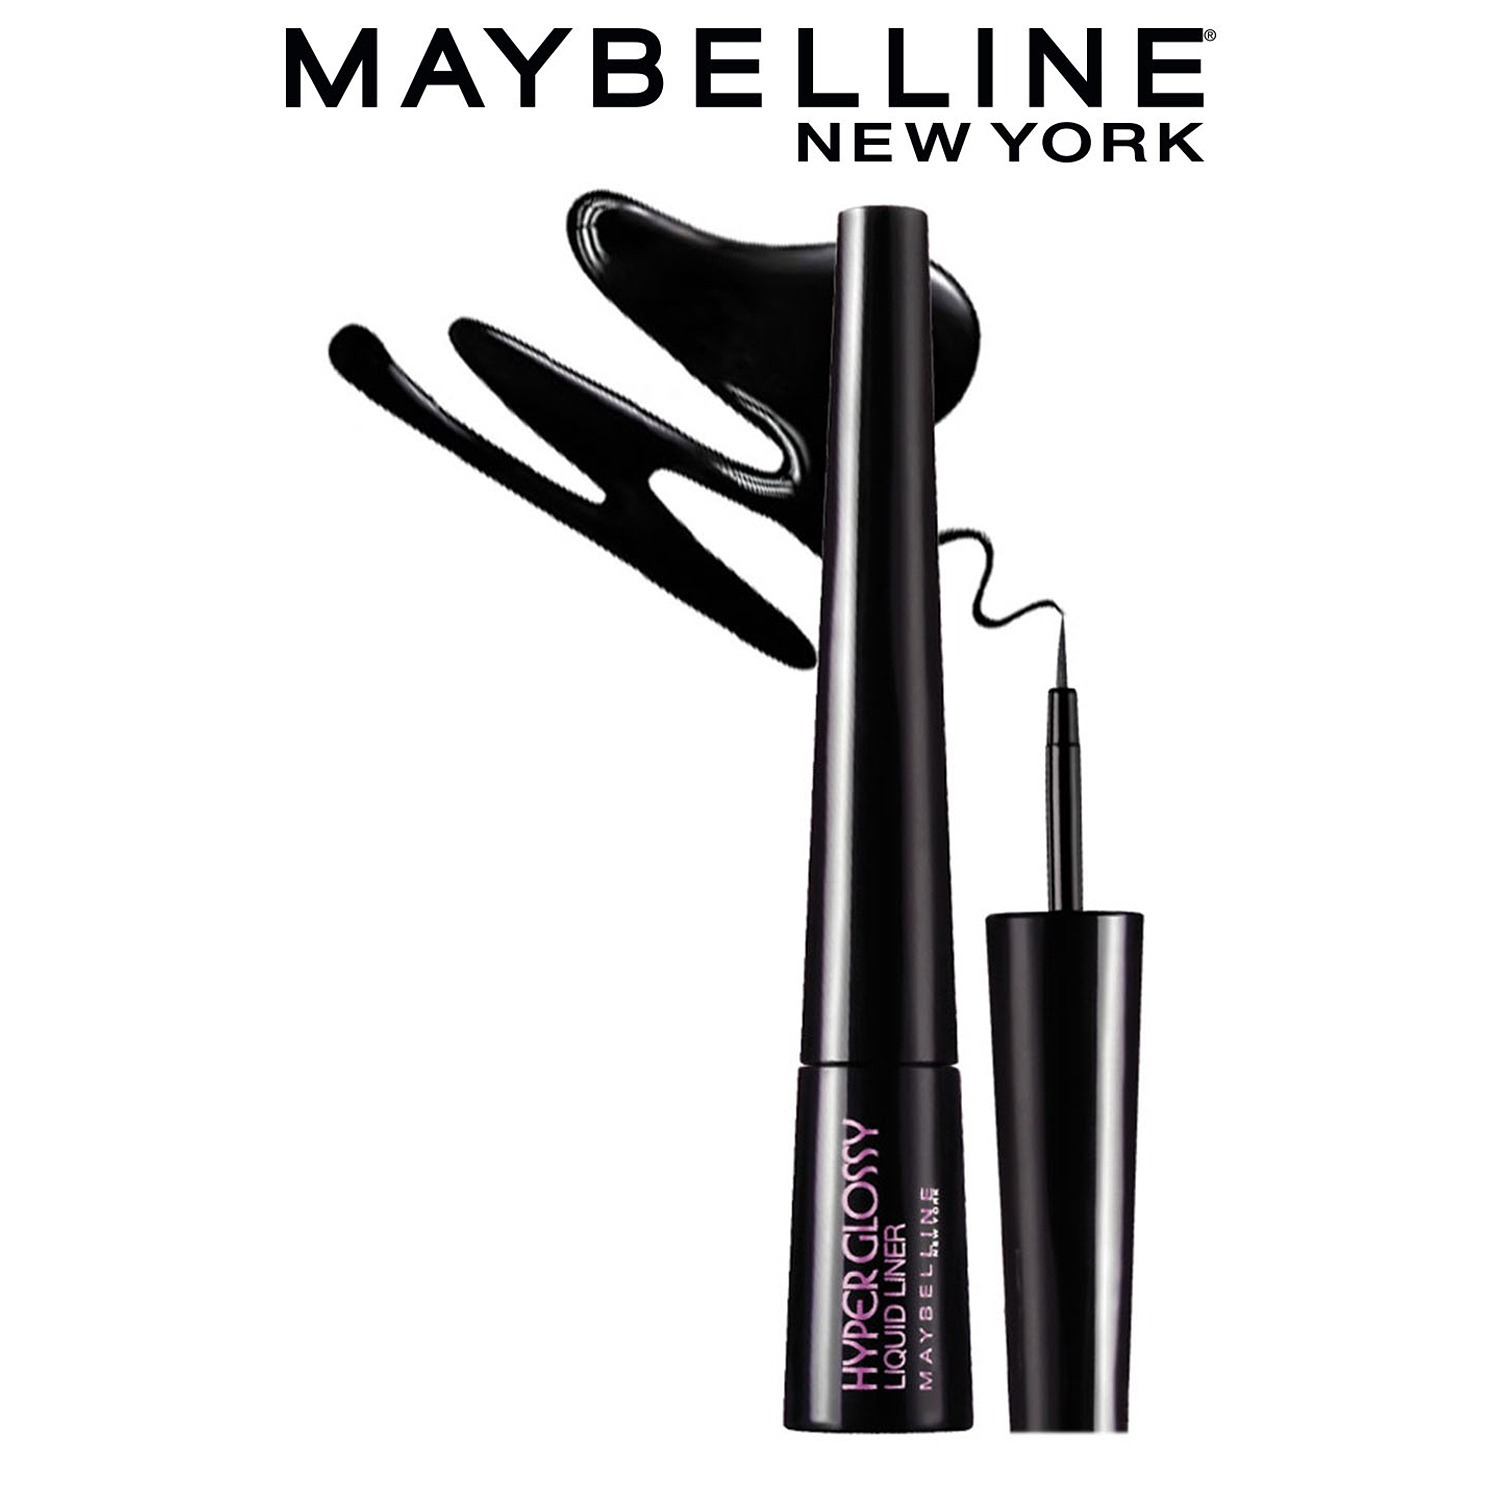 Maybelline New York | Maybelline New York Hyper Glossy Liquid Eyeliner - Black (3g)